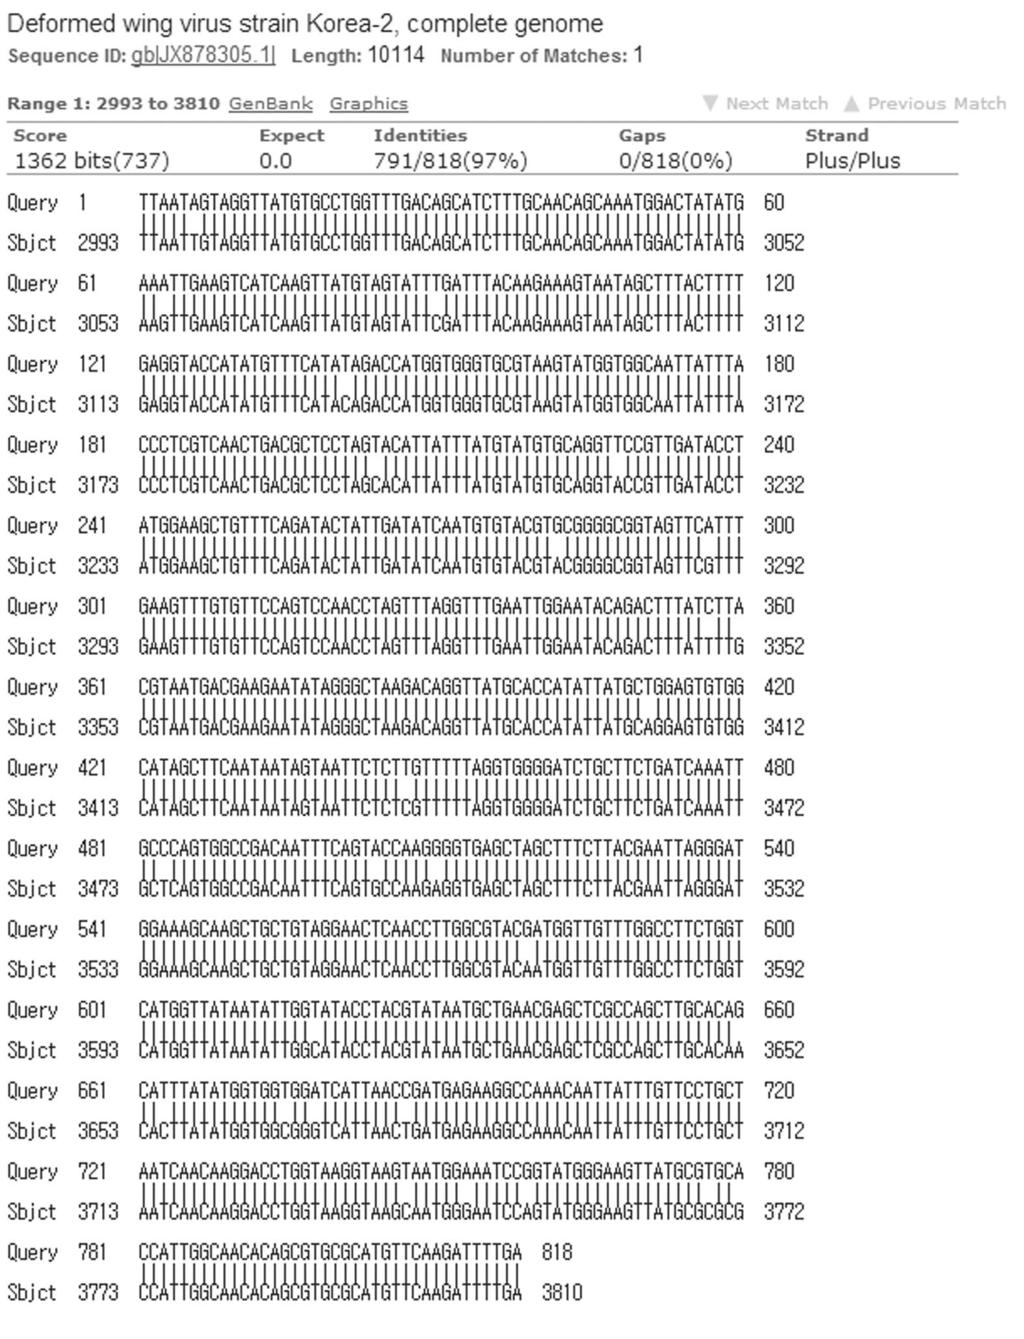 364 Fig. 3. DNA sequence homology between JX878305.1 and pbx DWV VP1. JX878305.1 is complete nucleotides of DWV deposited in GenBank.